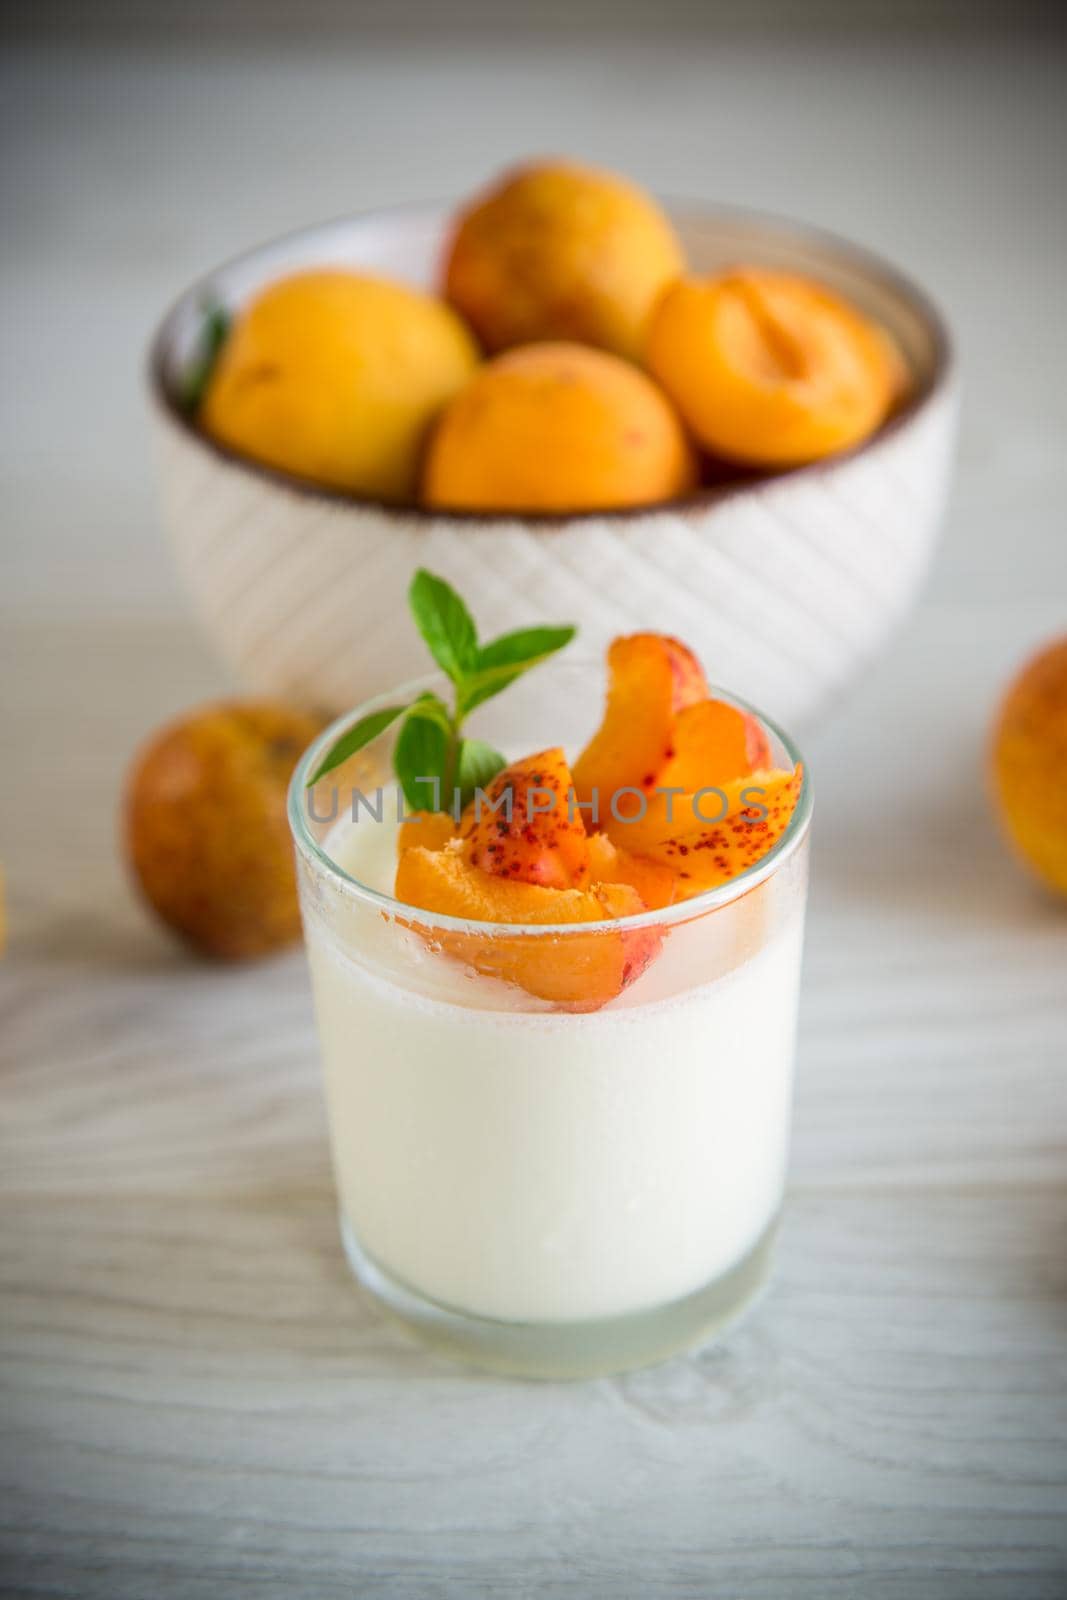 Healthy breakfast of homemade yogurt in a glass with fresh apricots by Rawlik